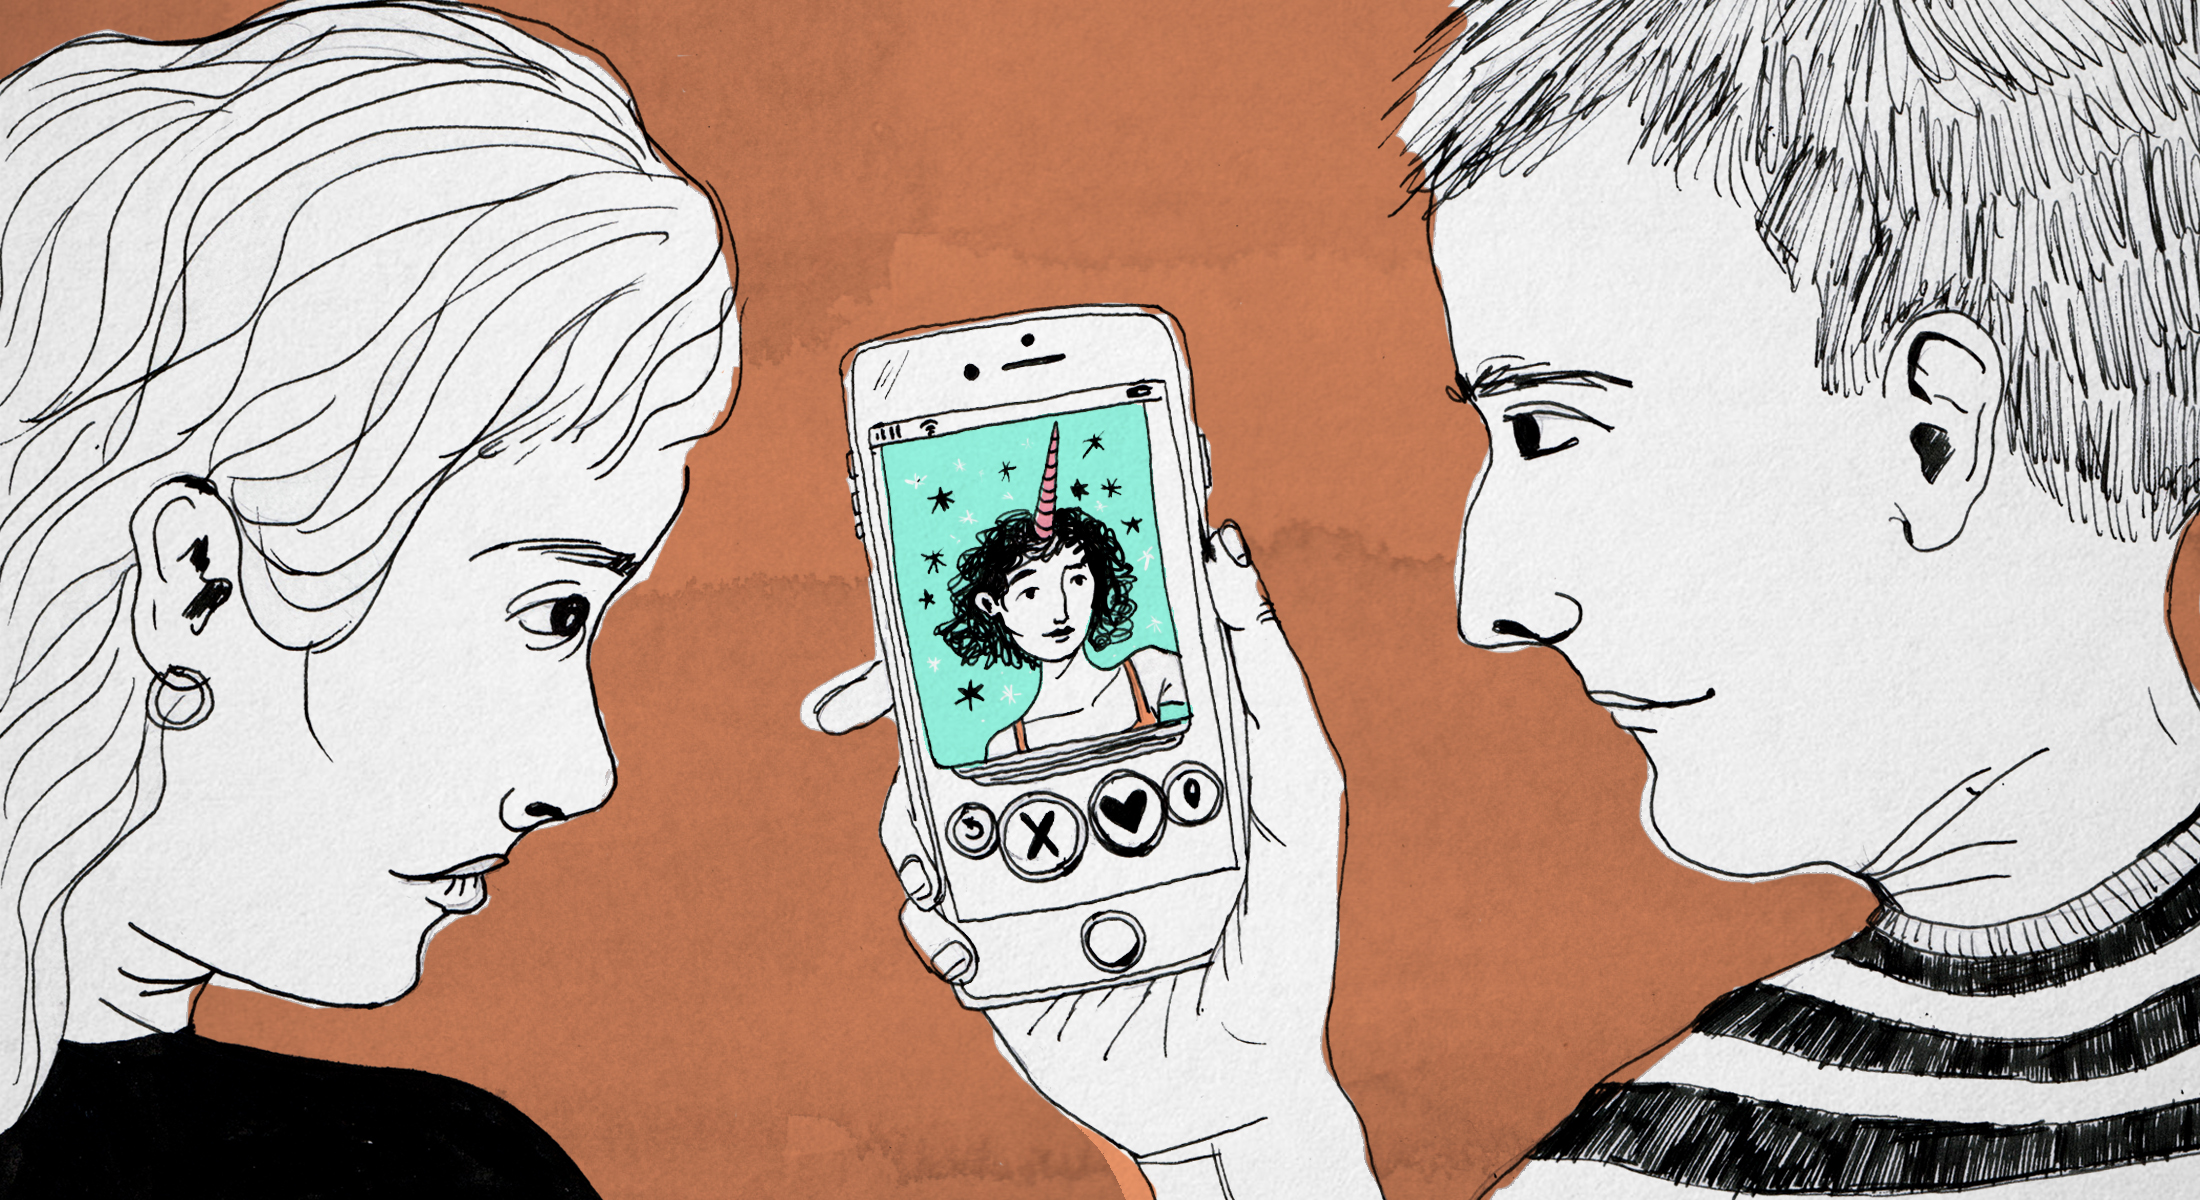 gratis bi dating apps Teenage dating site apps